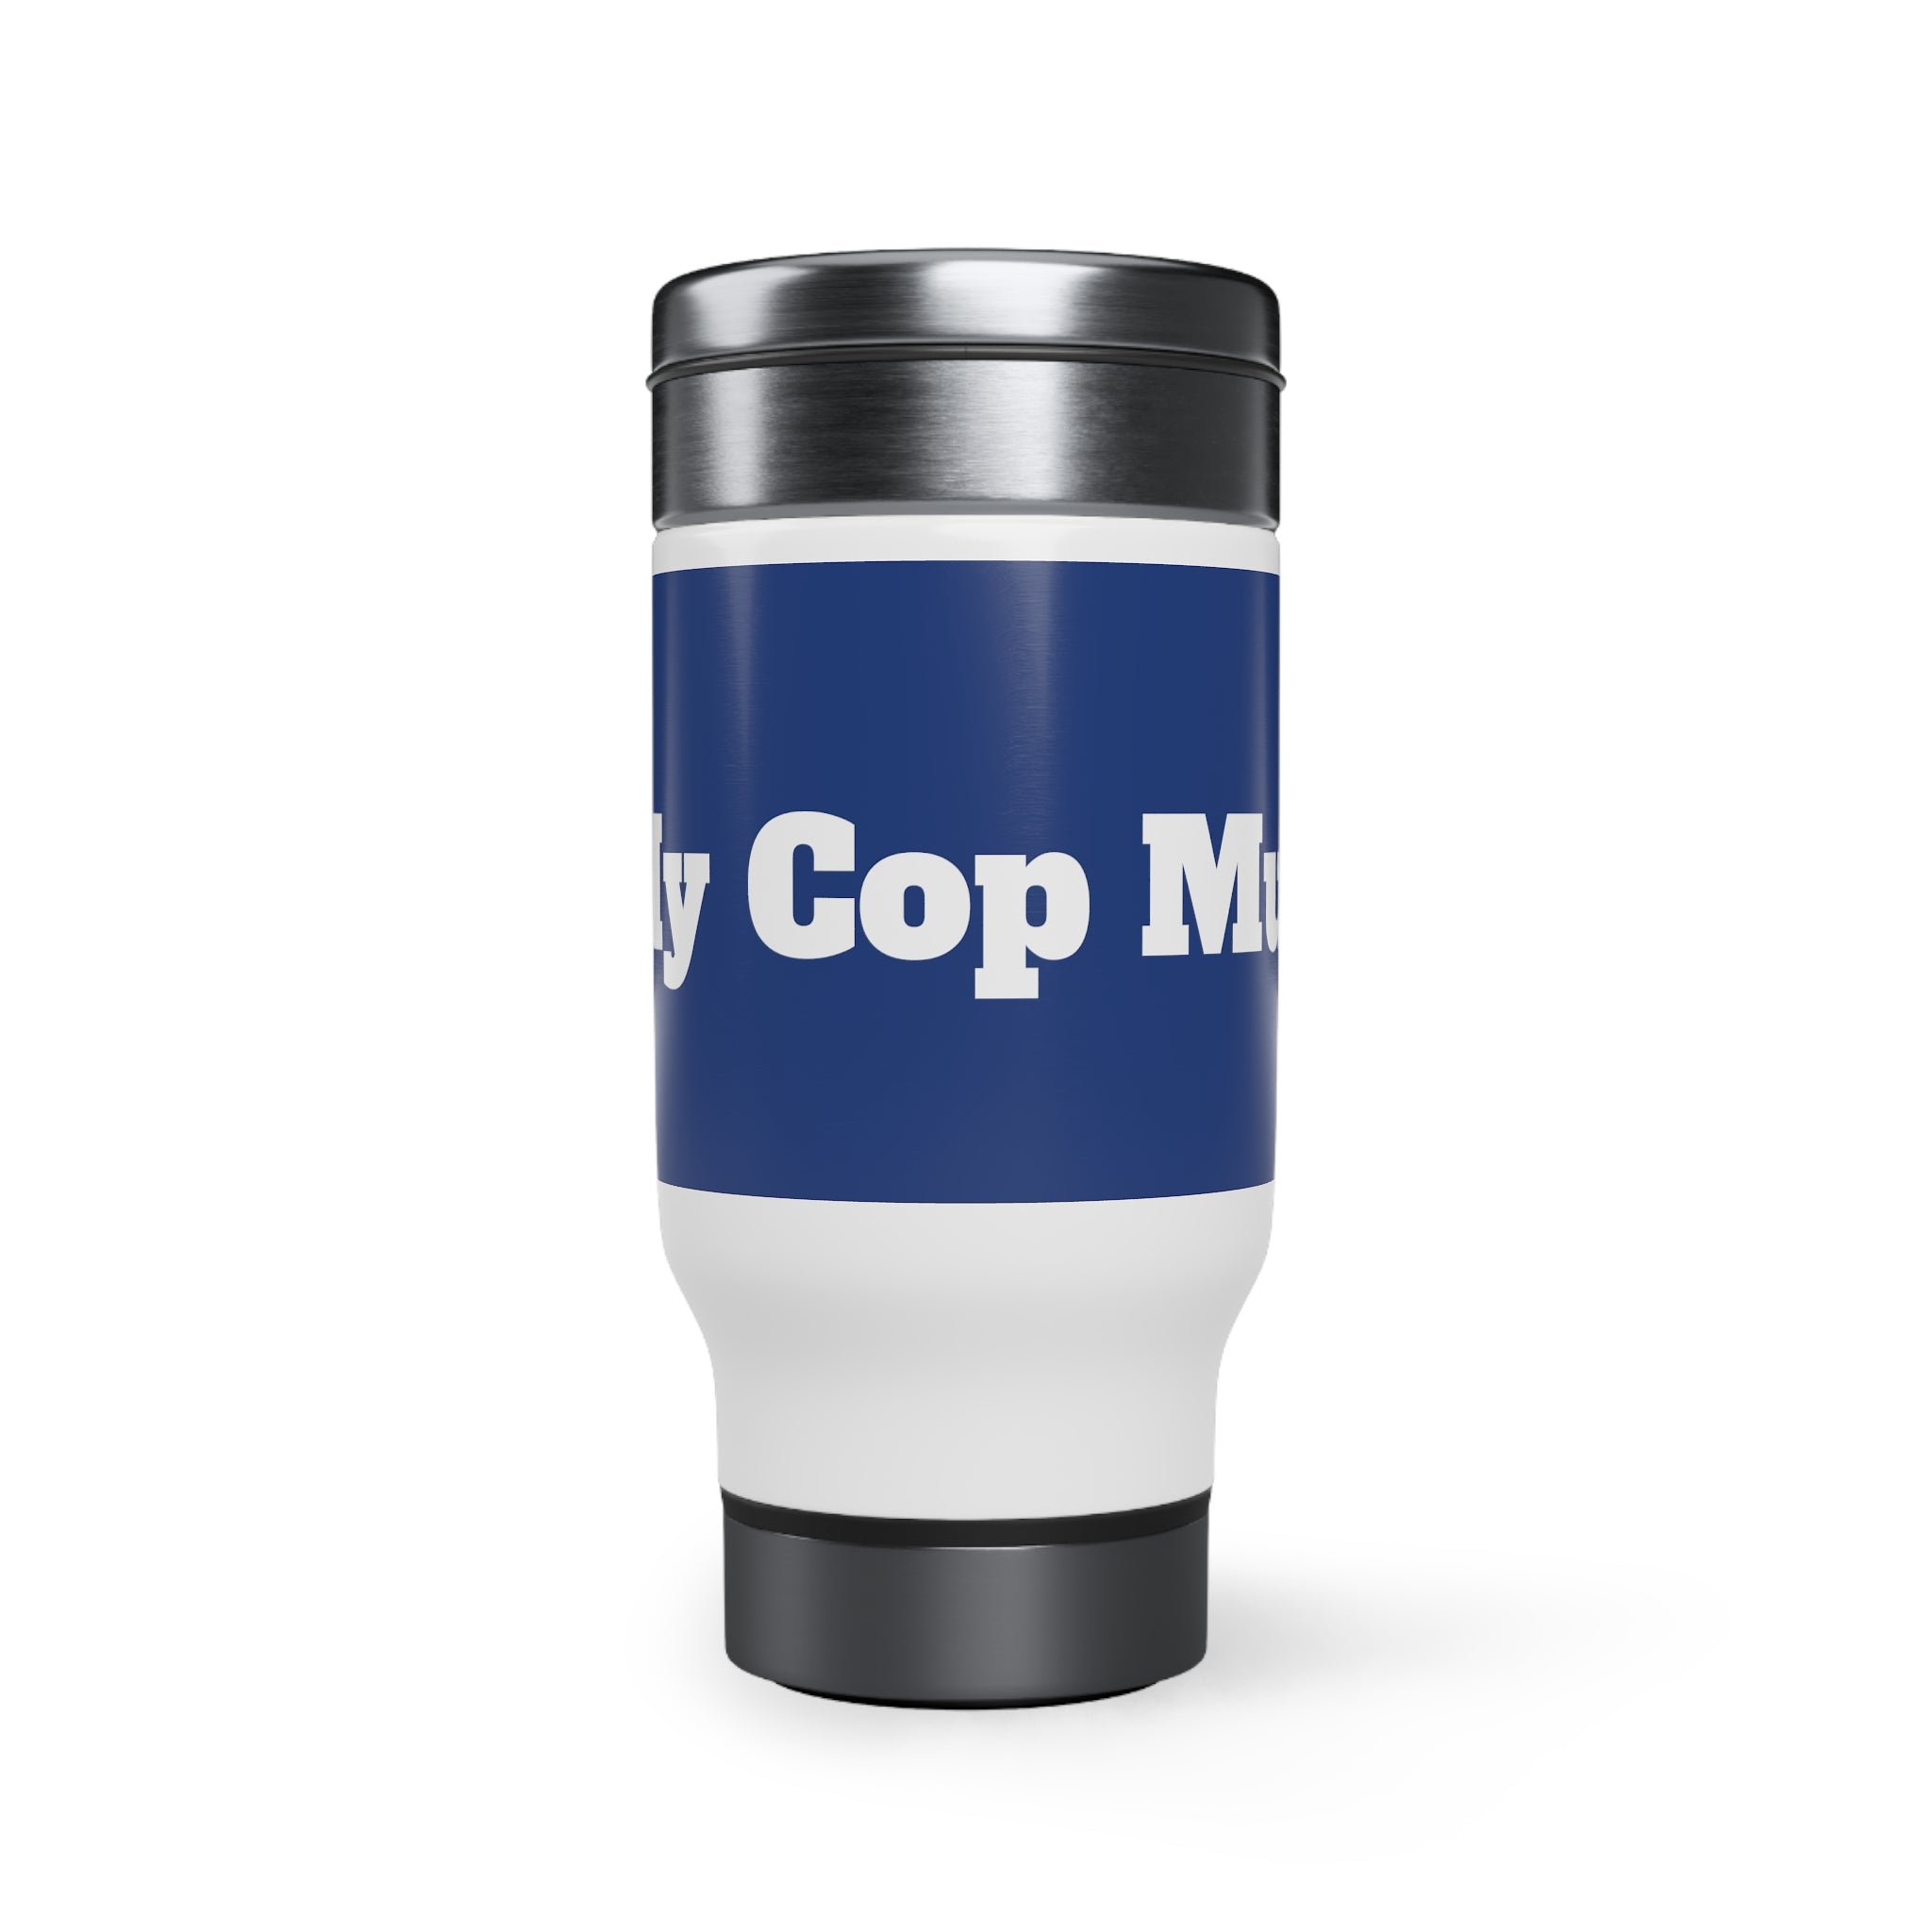 "My Cop Mug" Stainless Steel Travel Mug with Handle, 14oz